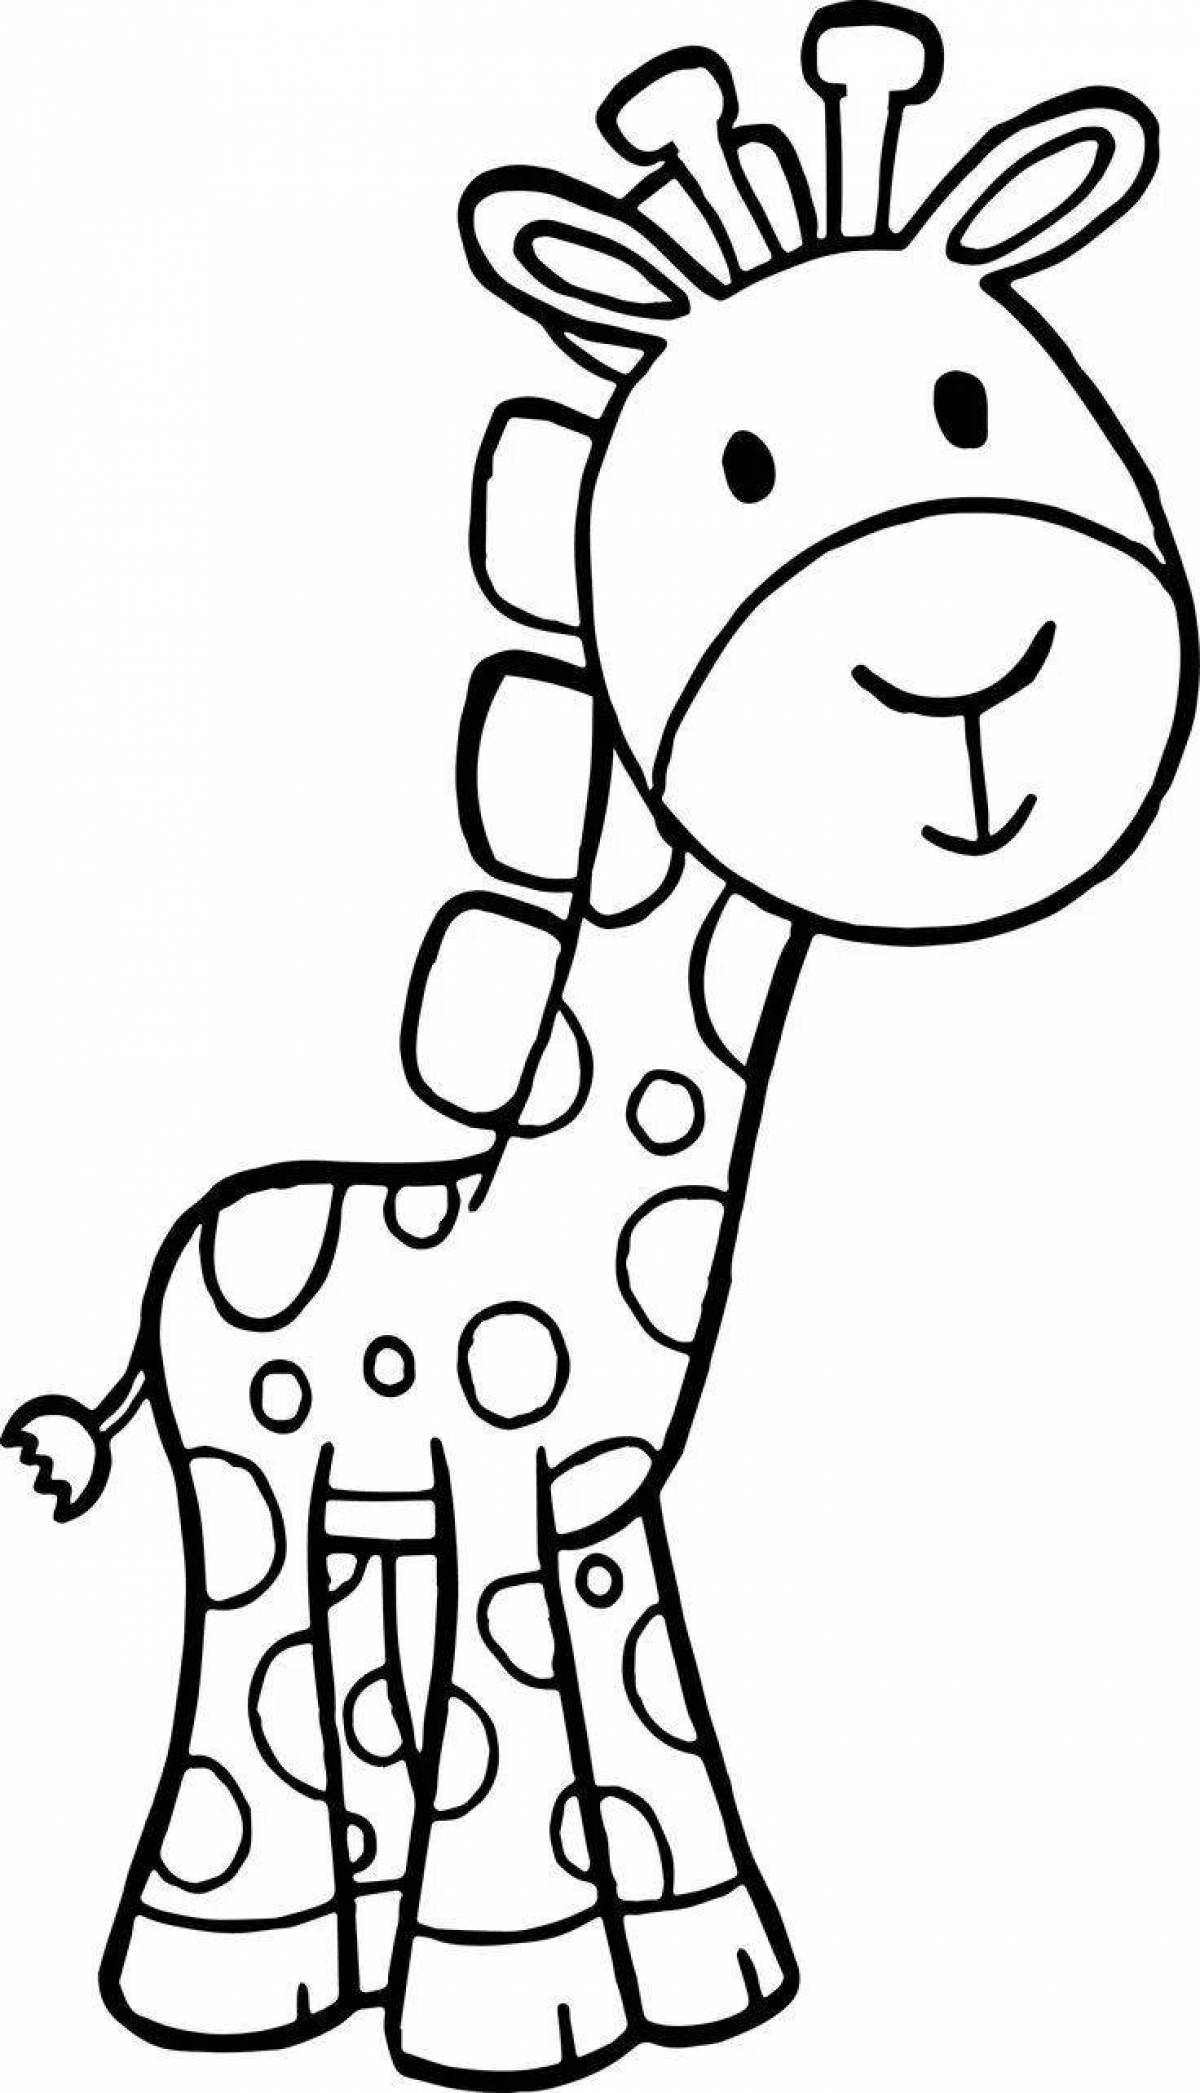 Funny drawing of a giraffe